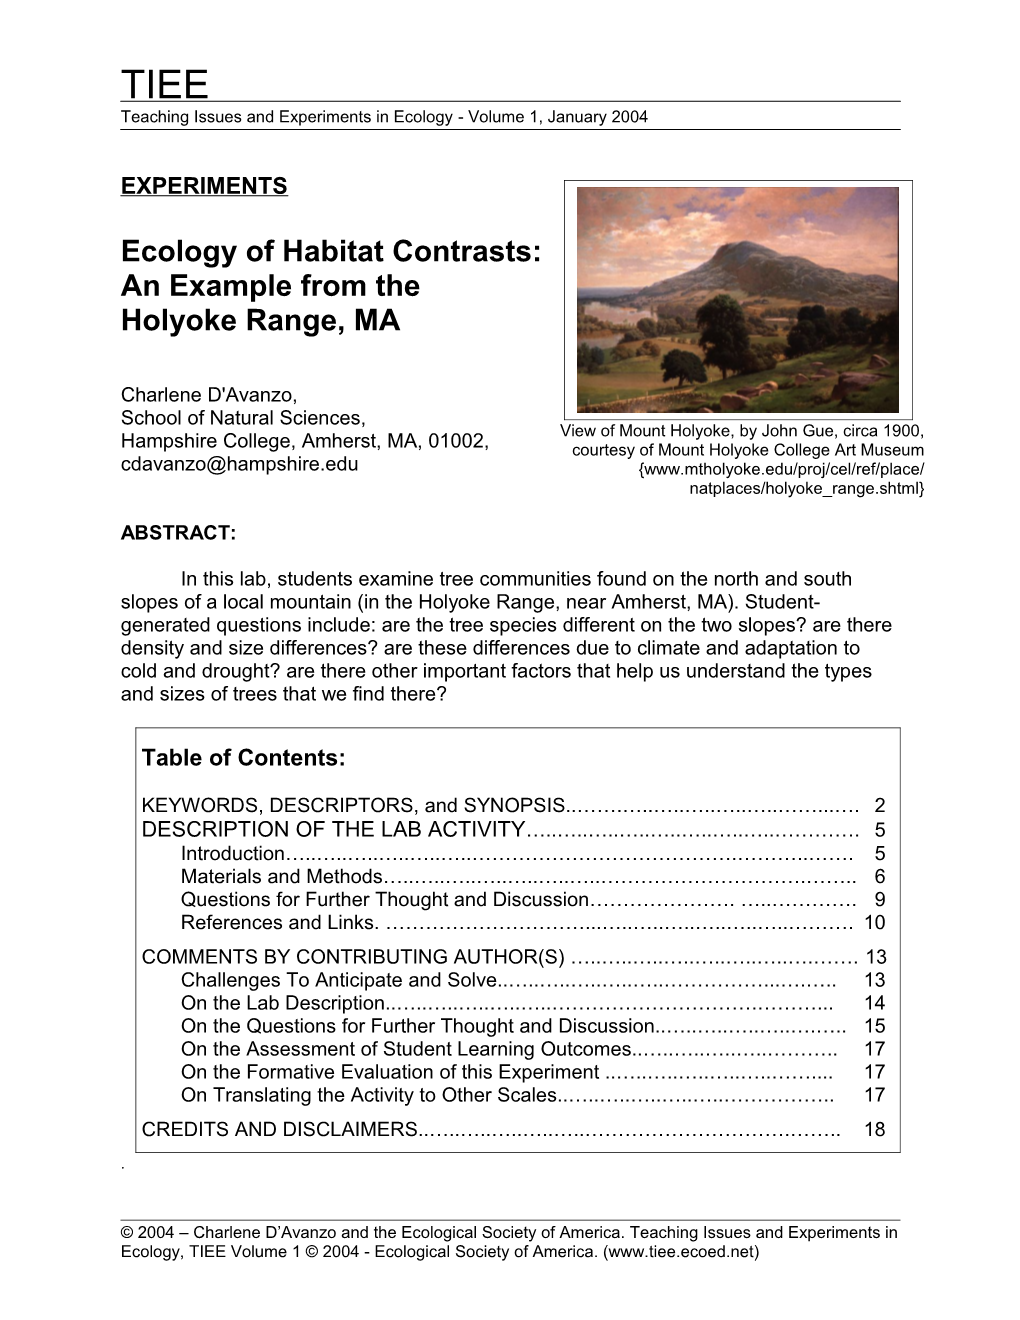 TIEE Experimentecology of Habitat Contrastspage 1